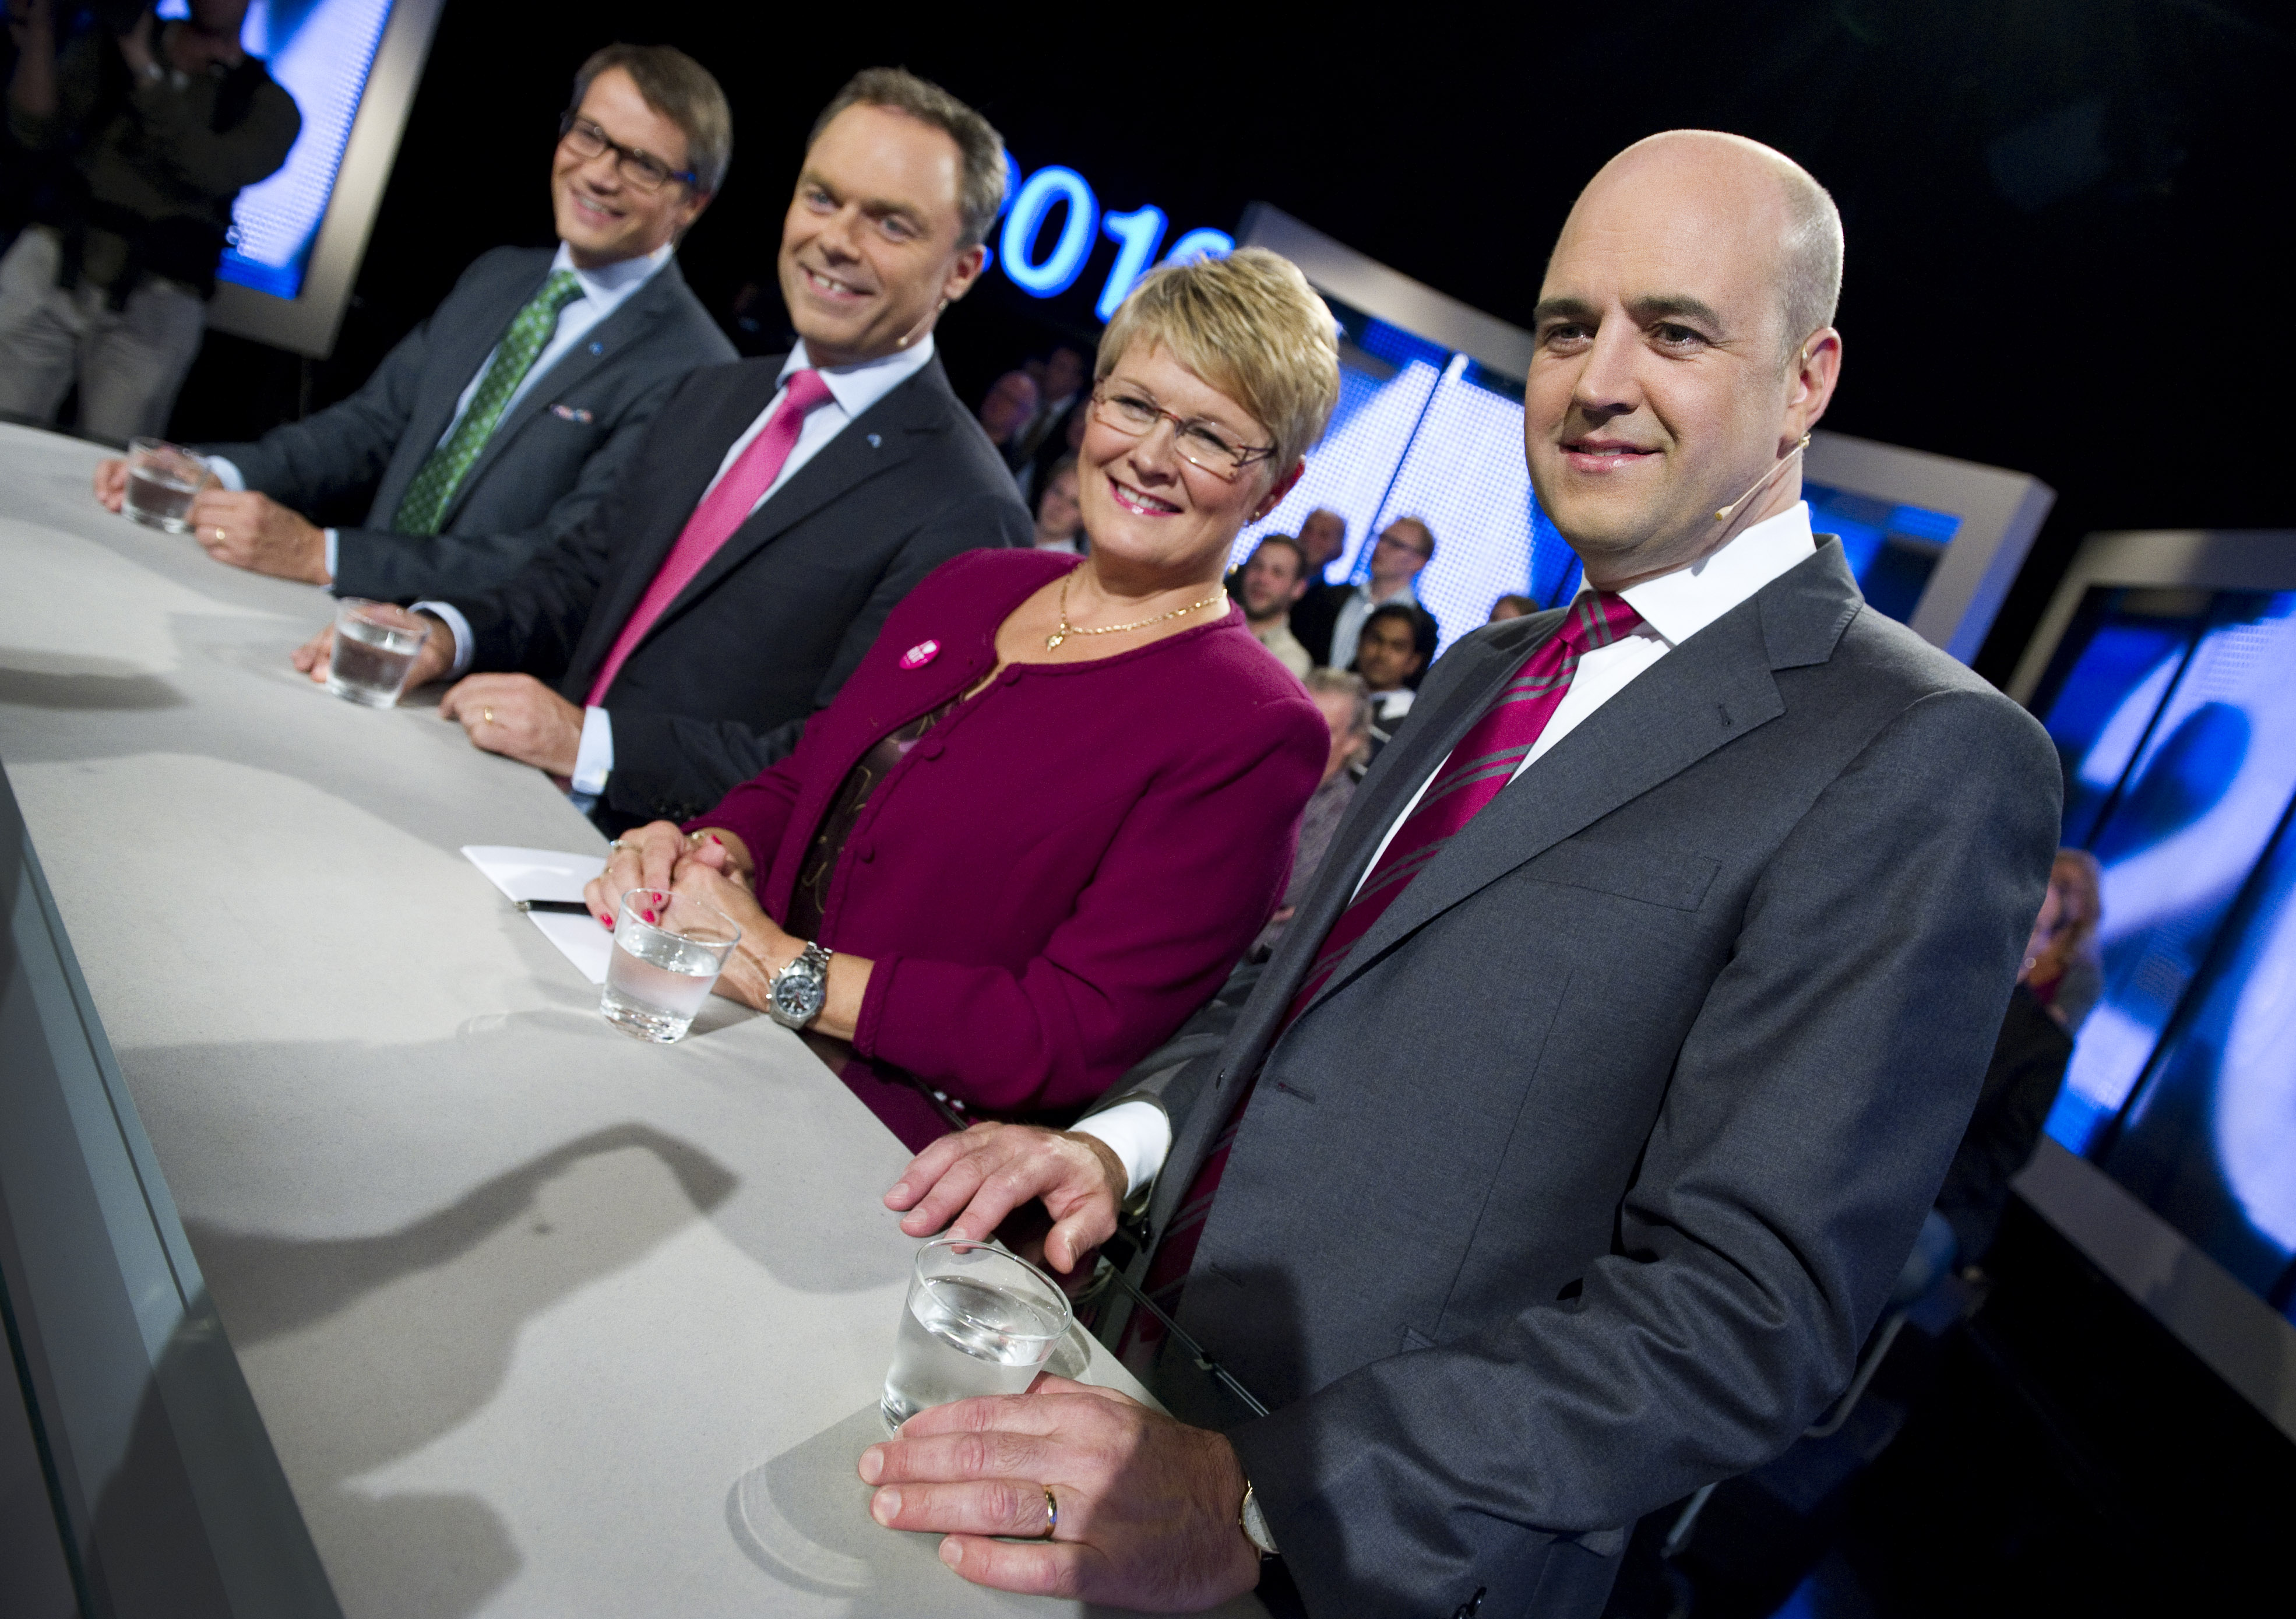 Fredrik Reinfeldt, Jan Björklund, Partiledarutfrågning, Malou von Sivers, Jenny Östergren, Alliansen, TV4, Riksdagsvalet 2010